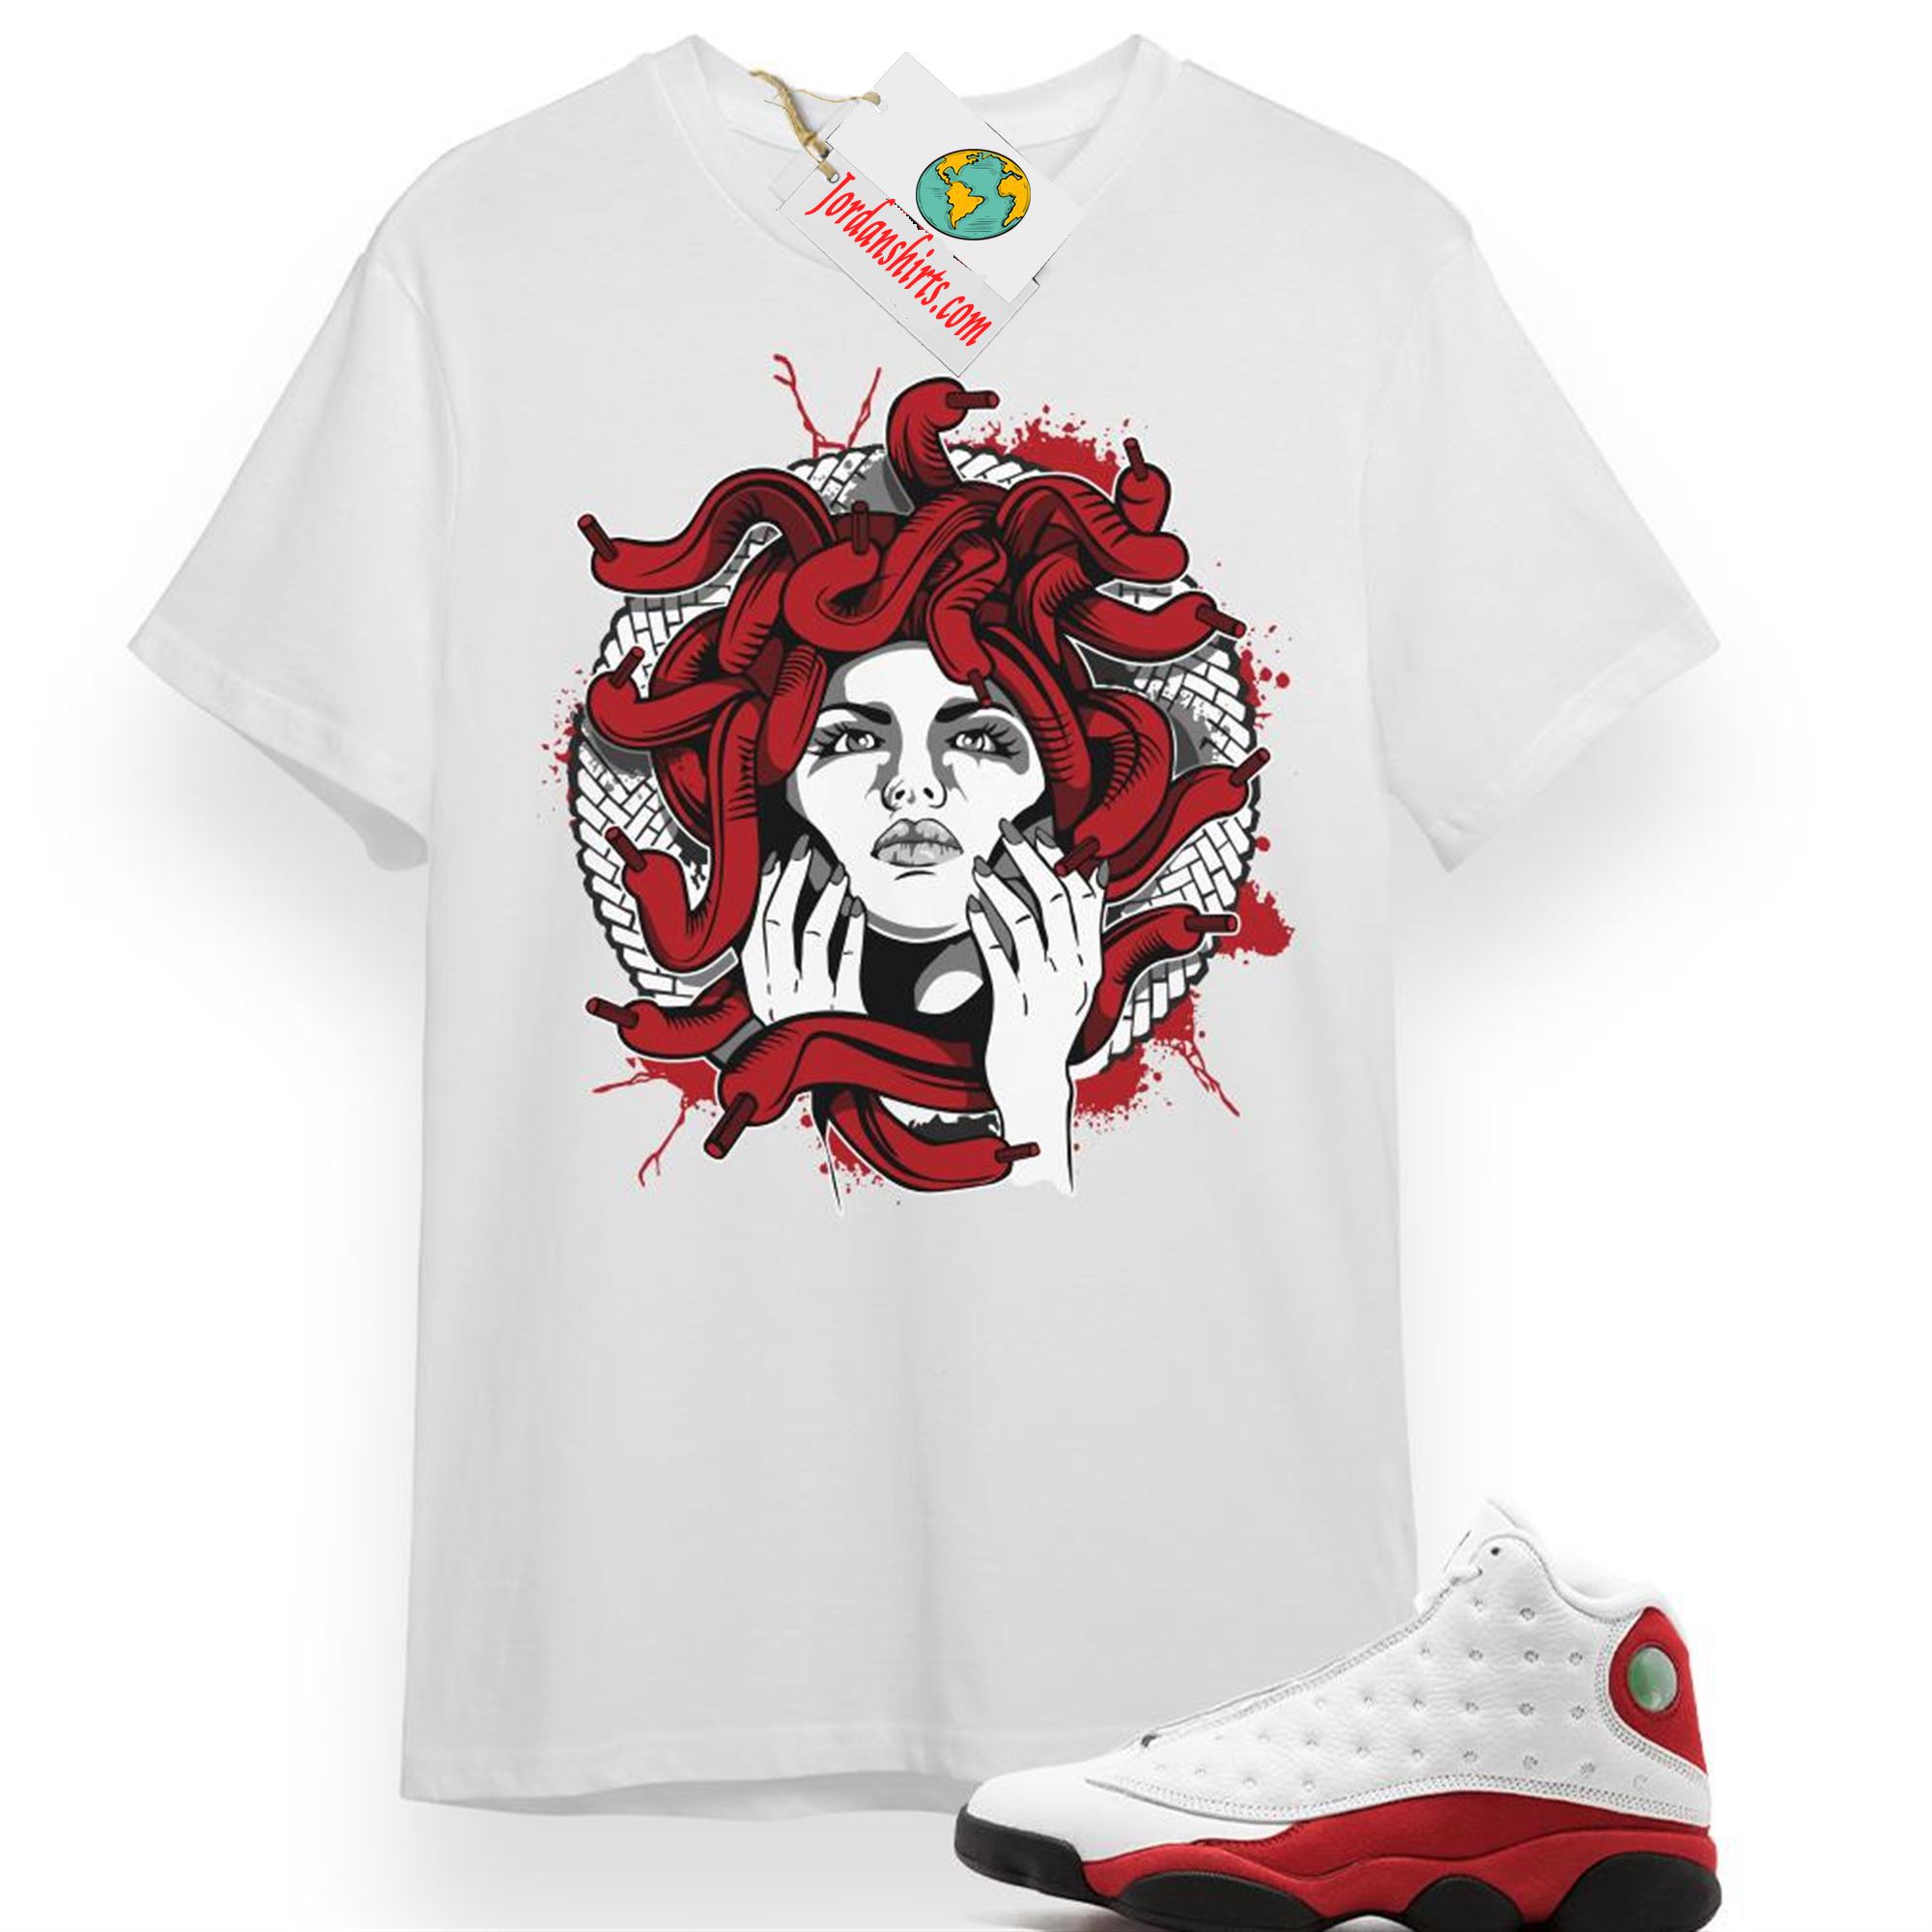 Jordan 13 Shirt, Medusa White T-shirt Air Jordan 13 Chicago 13s Full Size Up To 5xl